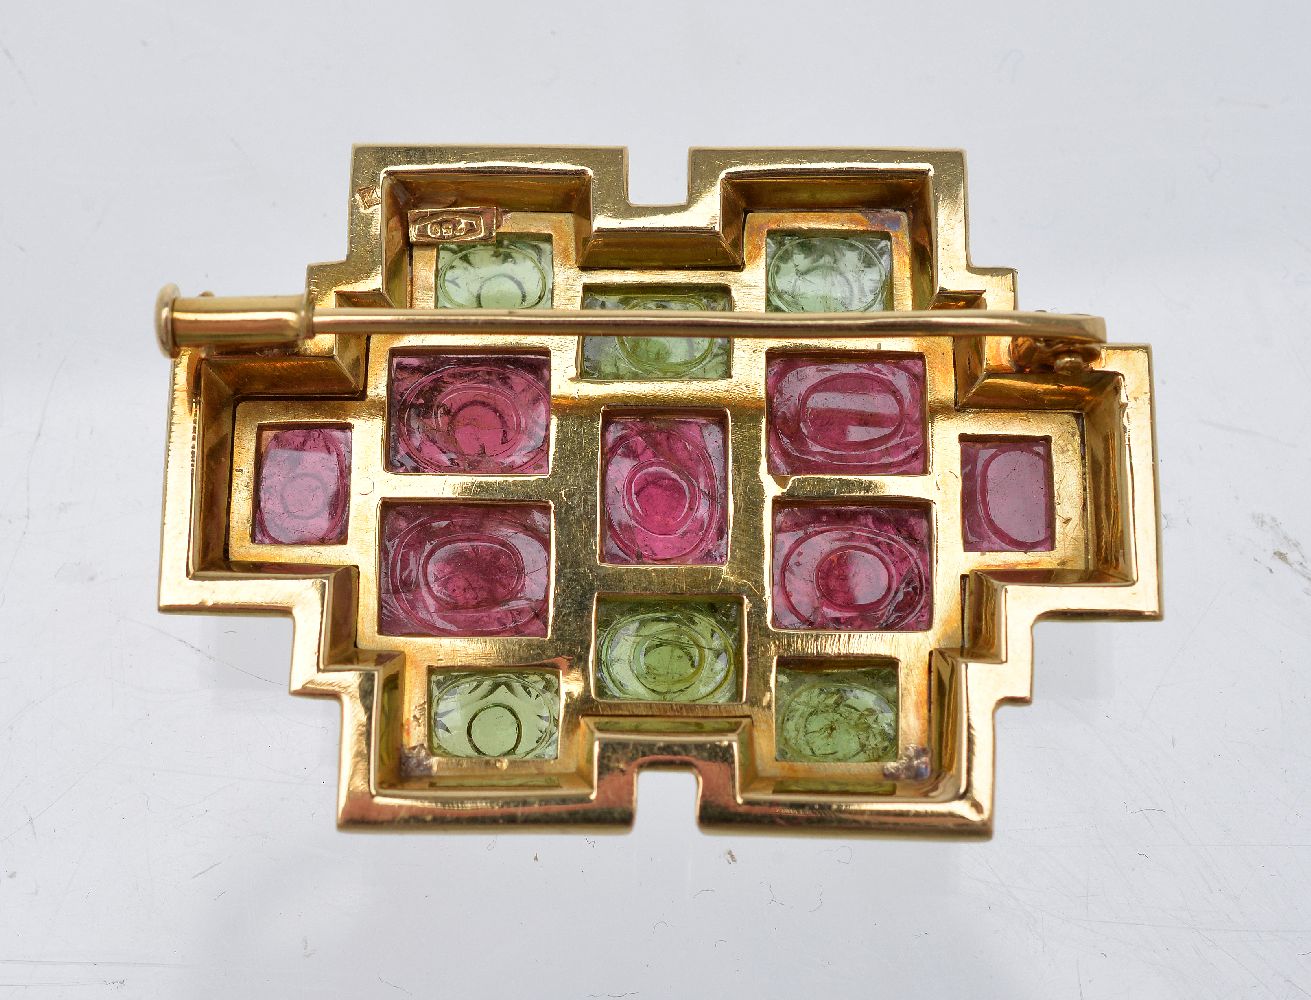 A tourmaline and diamond brooch - Image 2 of 2